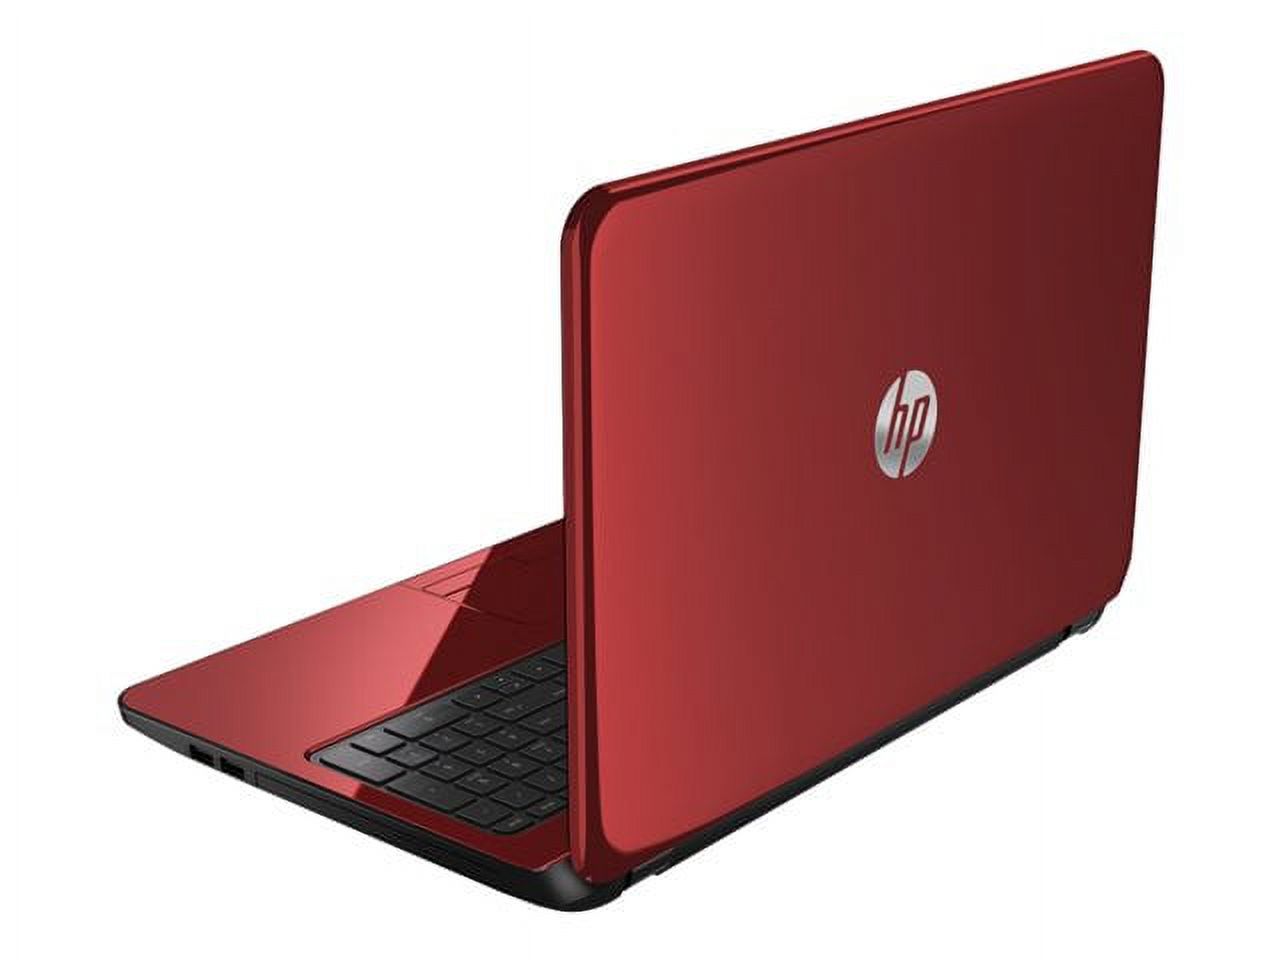 HP Laptop 15-R132wm - Intel Pentium N3540 / 2.16 GHz - Win 8.1 64-bit - HD Graphics - 4 GB RAM - 500 GB HDD - DVD SuperMulti - 15.6" 1366 x 768 (HD) - flyer red - image 4 of 7